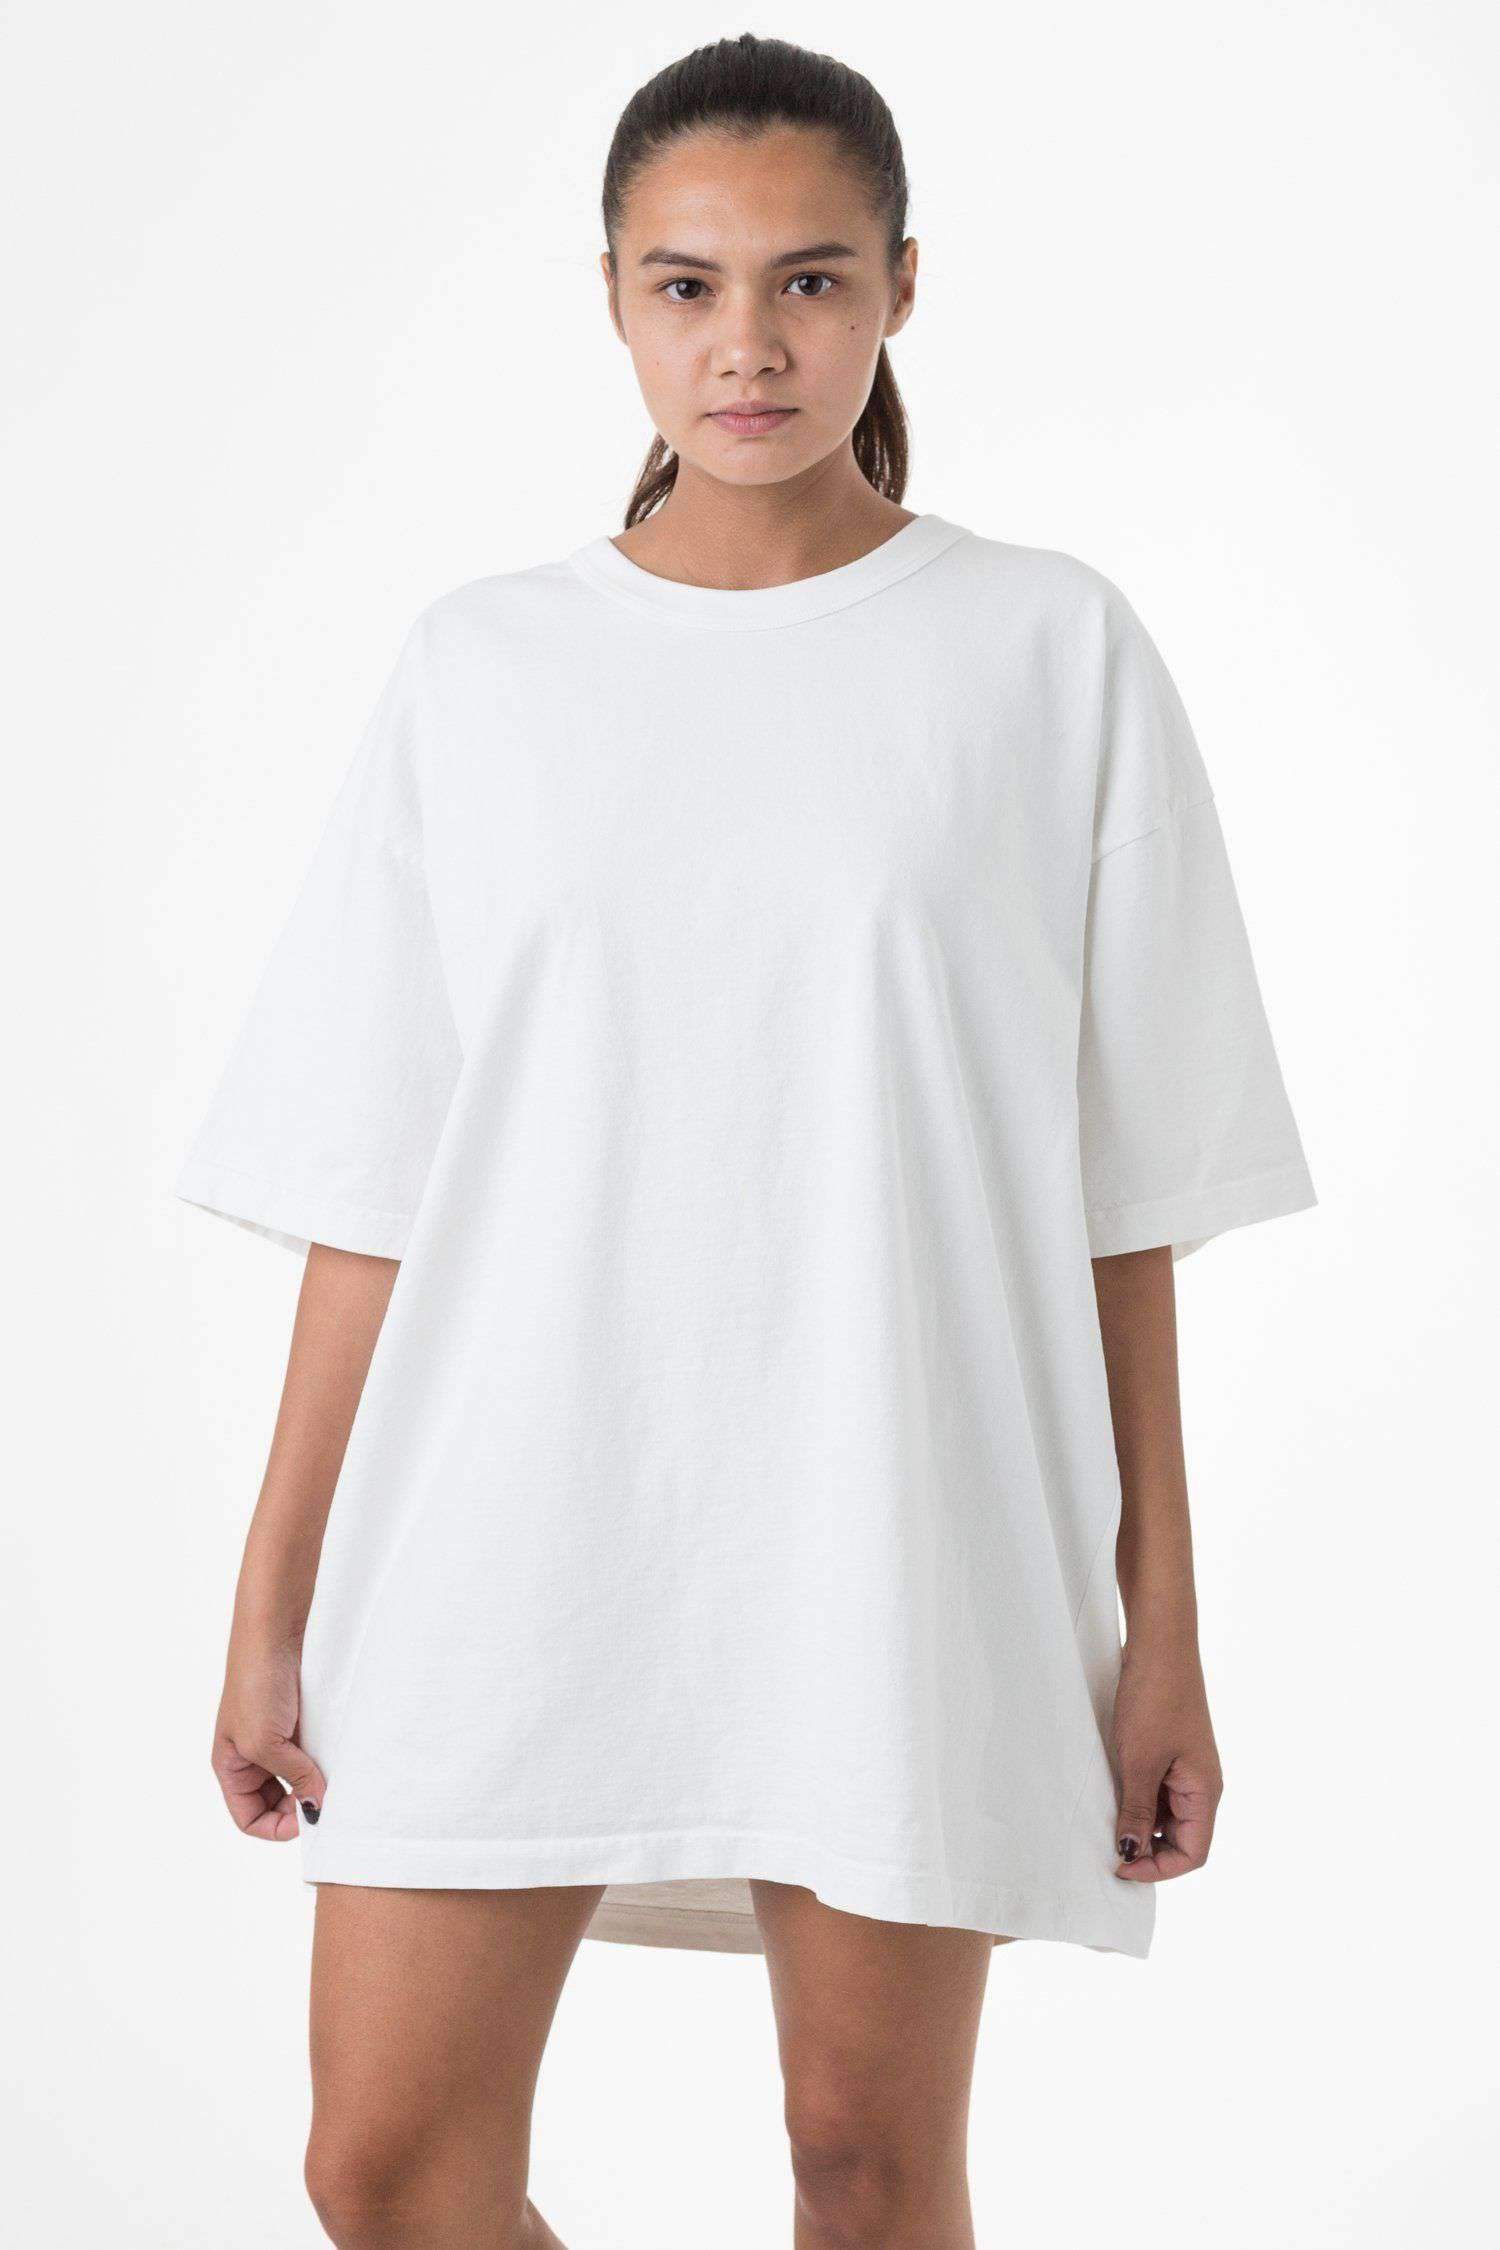 1203GD Unisex - Short Sleeve Binding Garment Dye T-Shirt T-Shirt Los Angeles Apparel Off-White XS 